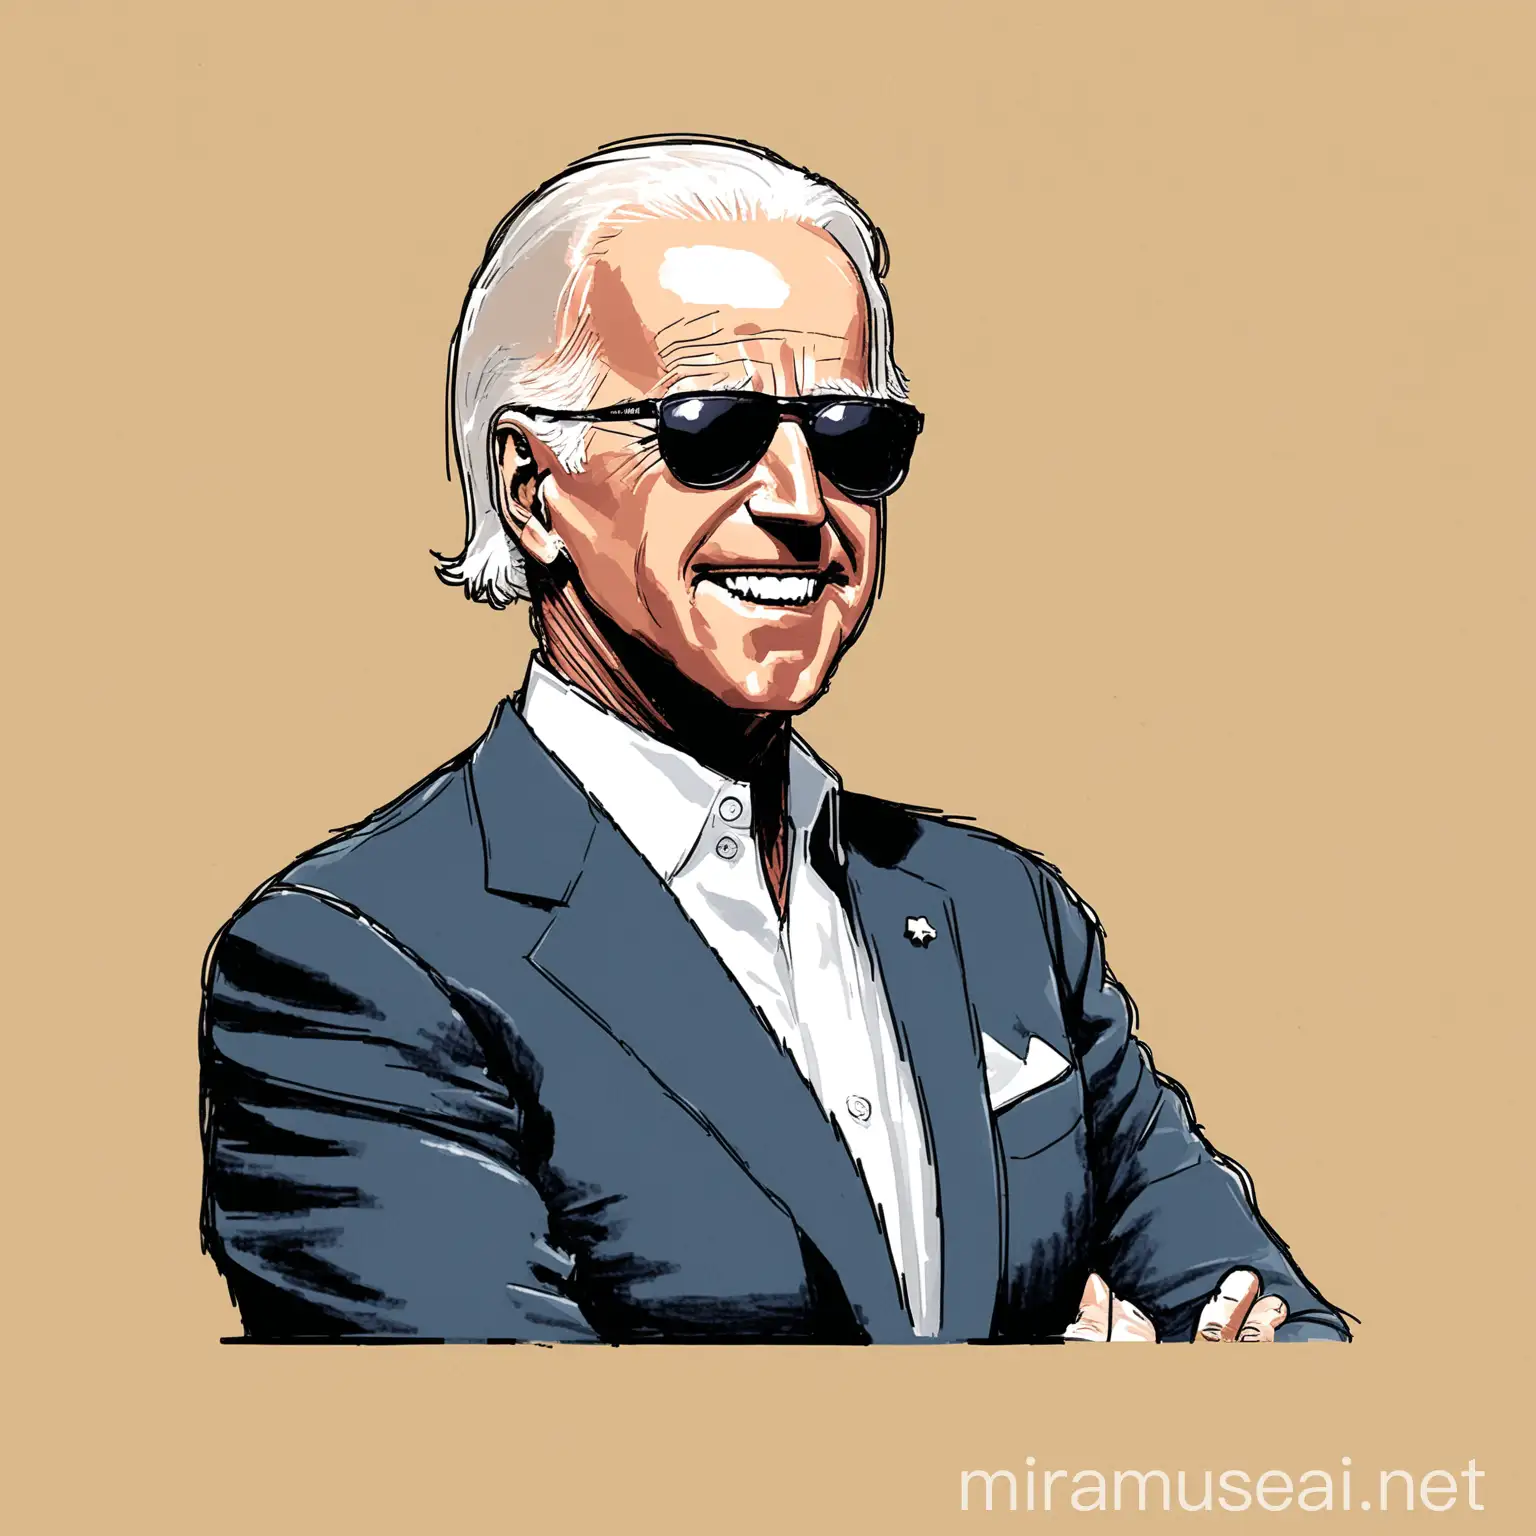 hand-drawn illustration of Joe Biden wears sunglasses
